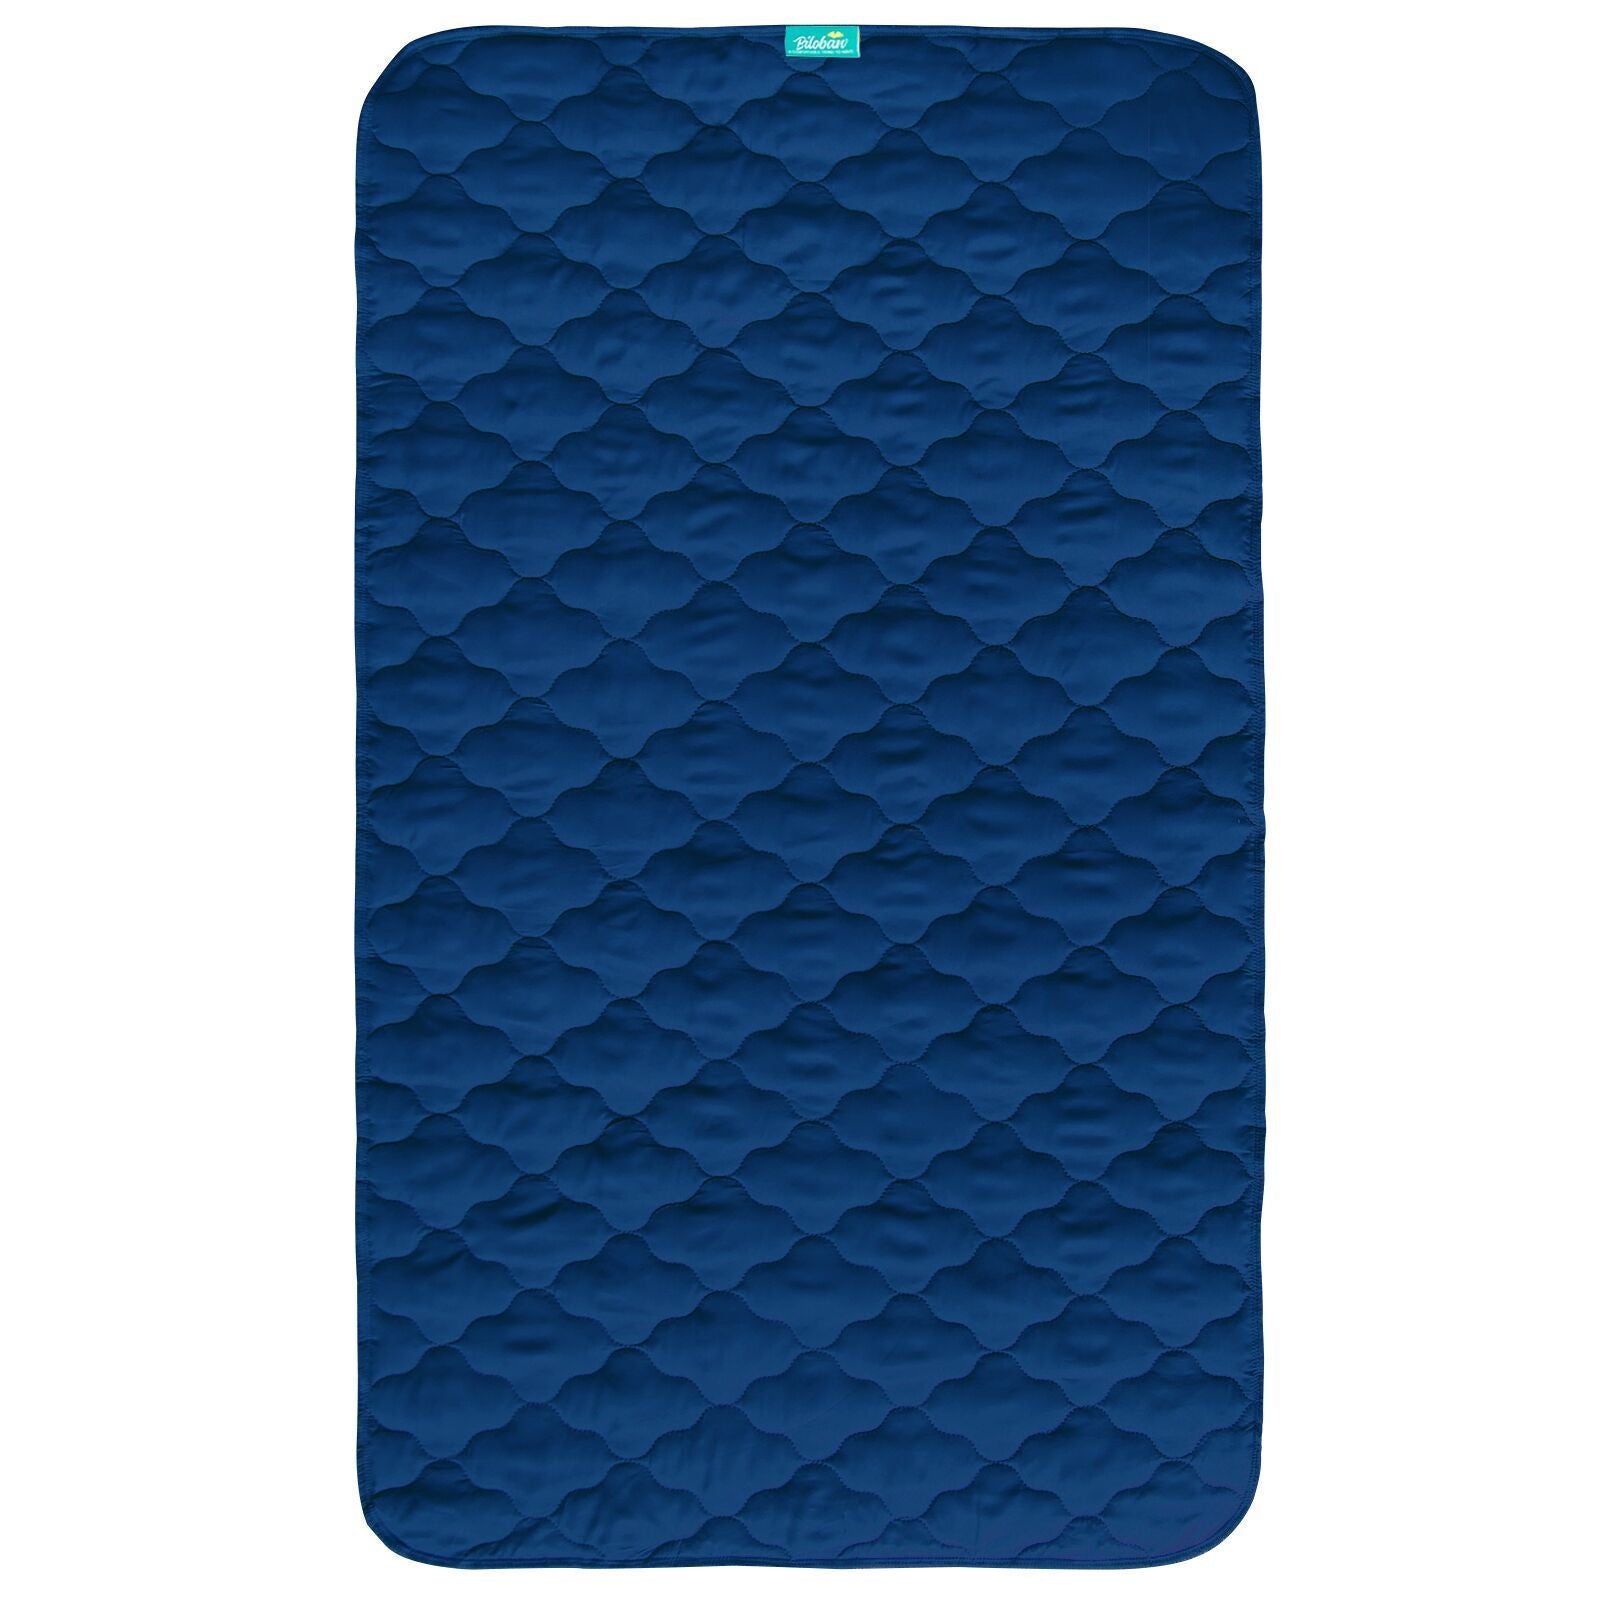 Waterproof Crib Mattress Protector Pad | Bed Pad - 52" x 28", Anti Slip & Durable, Navy - Biloban Online Store